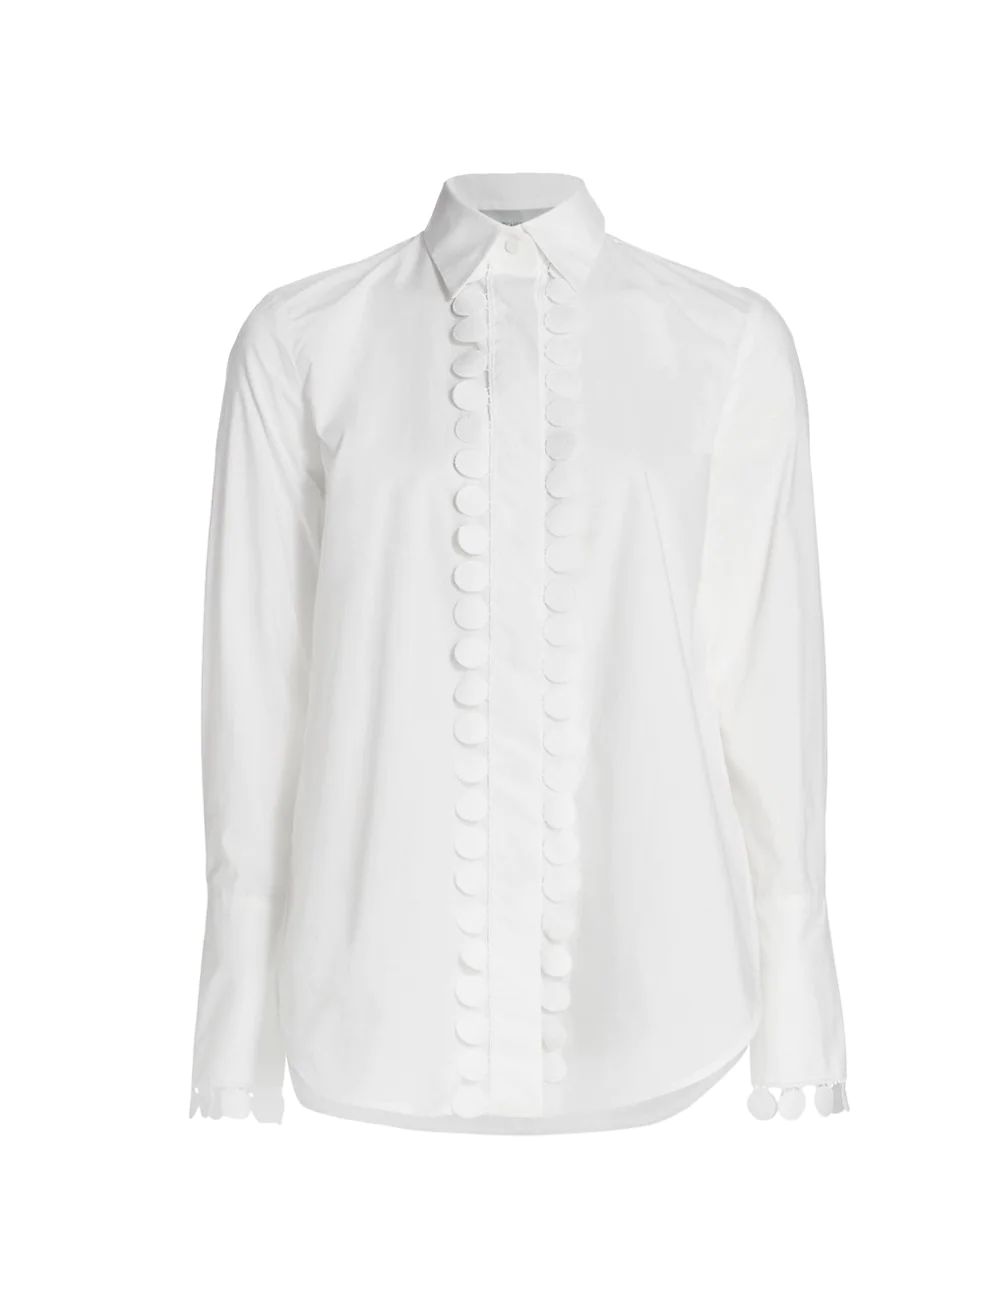 Silvia Tcherassi Embroidered Blouse  - saks fifth avenue - white blouse